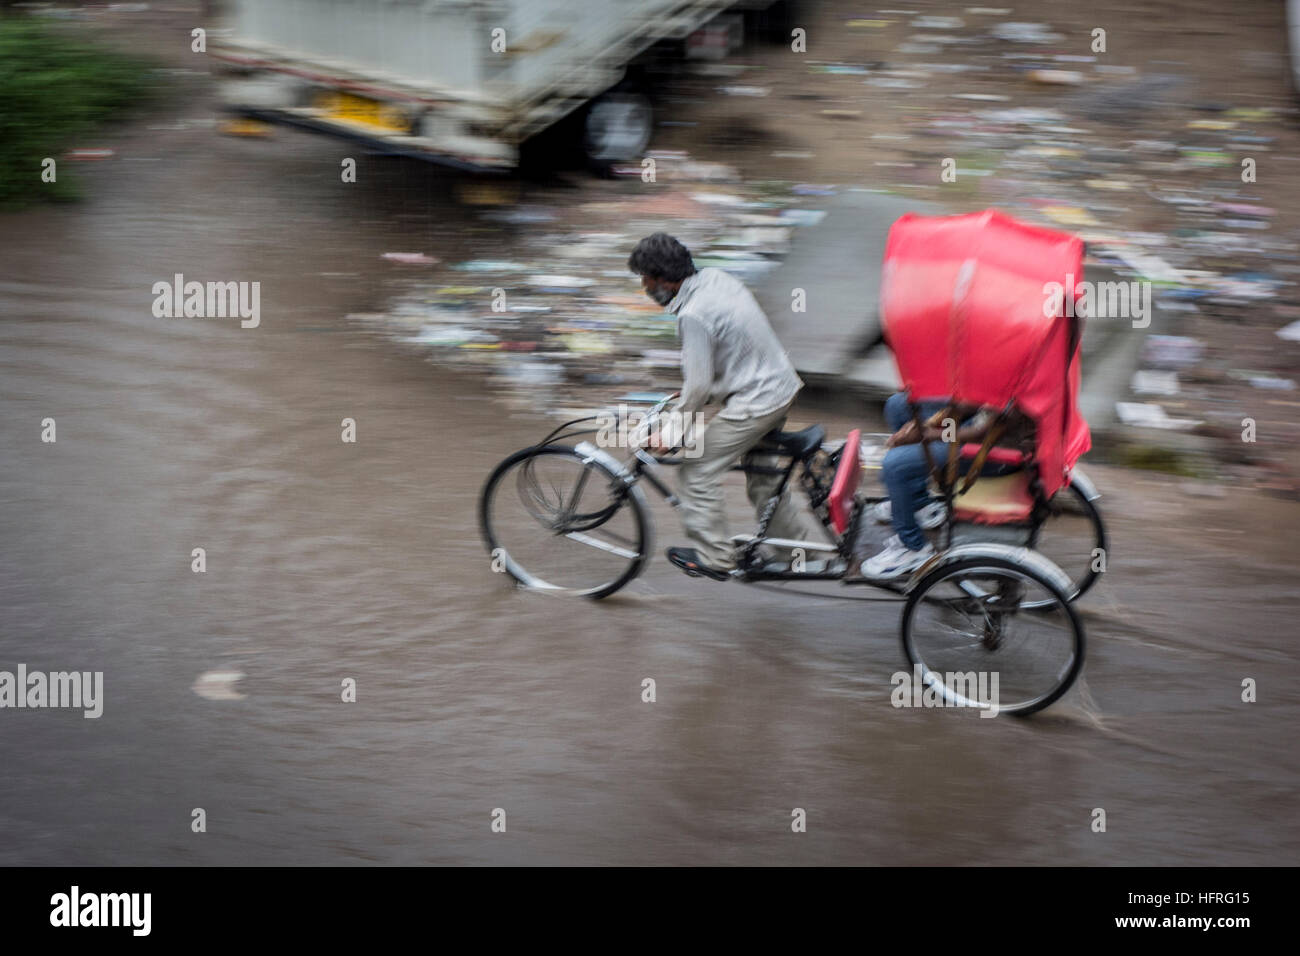 Bicycle rickshaw pedaling through flooding in the streets (Jaipur, India). Stock Photo